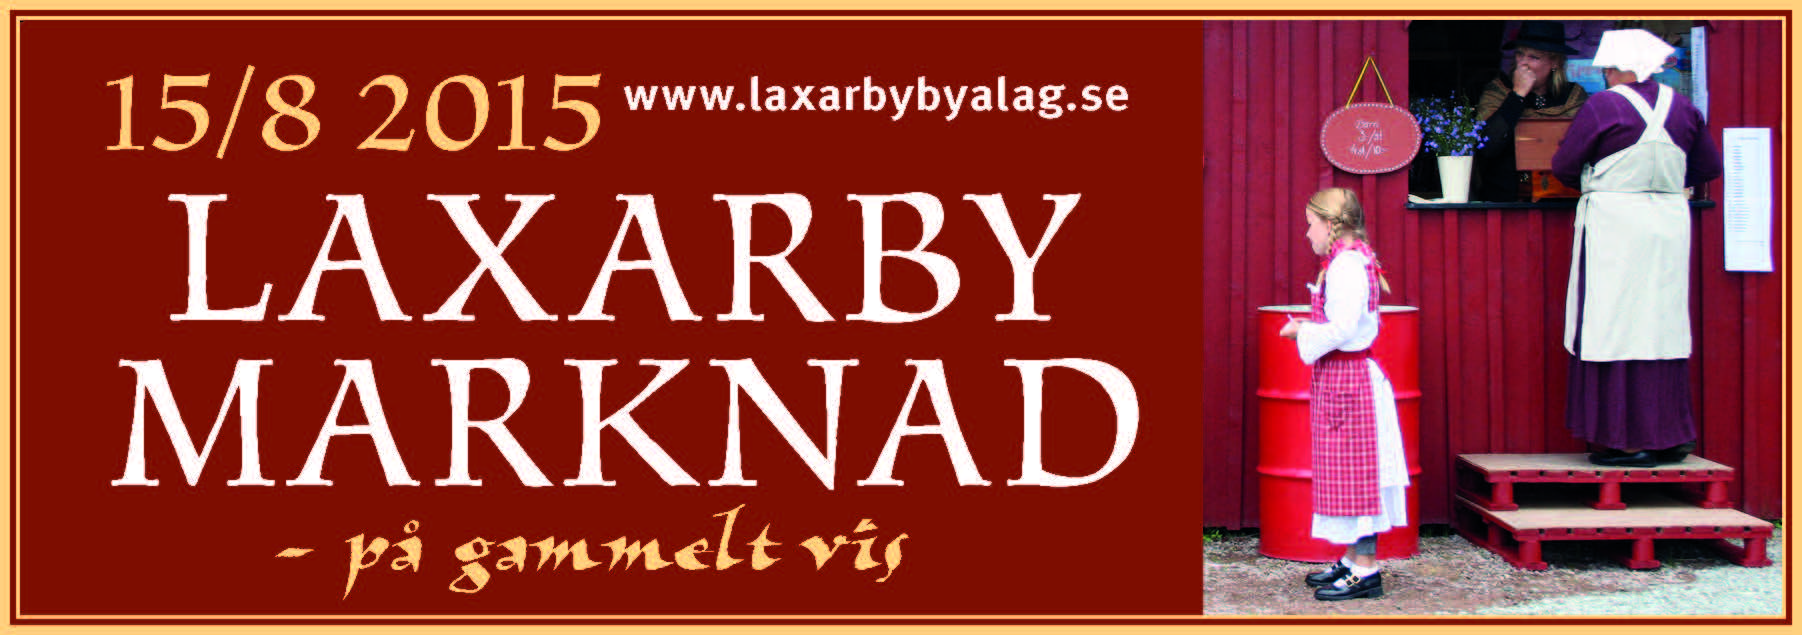 Laxarby marknads webbhead